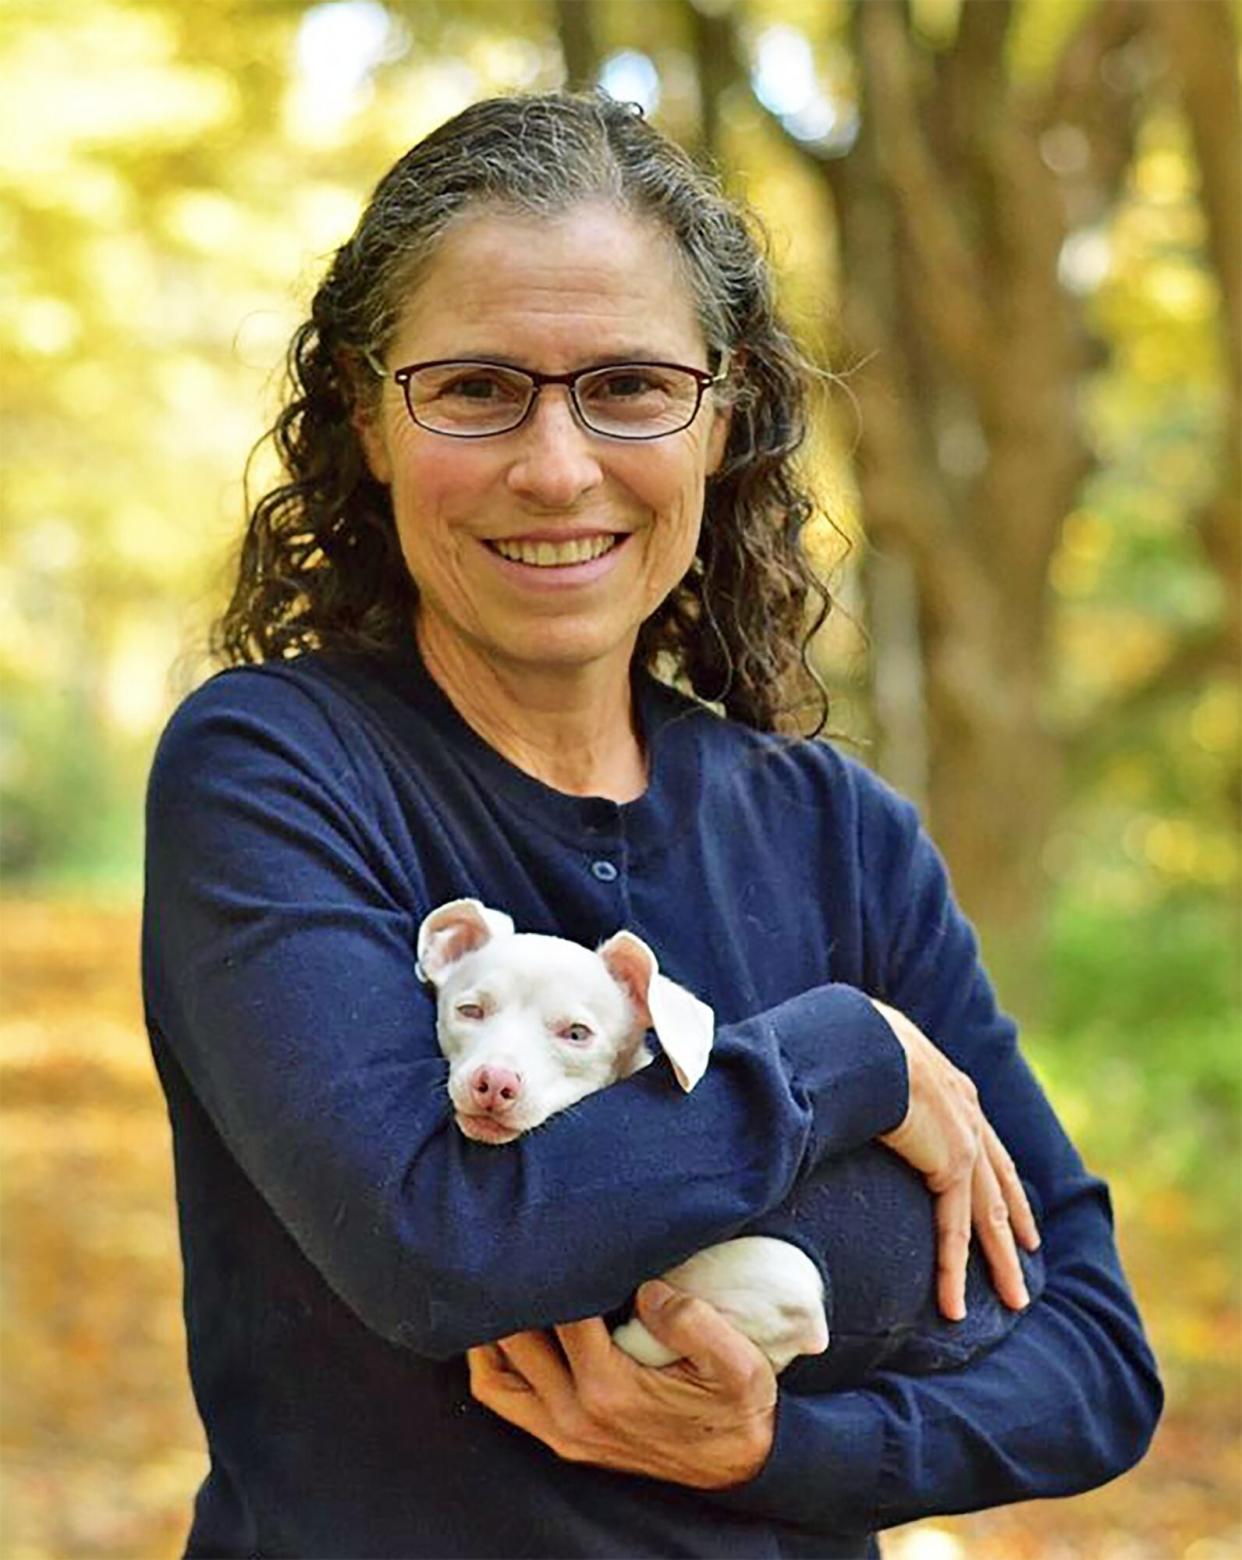 Melissa Shapiro posing with Piglet the Dog